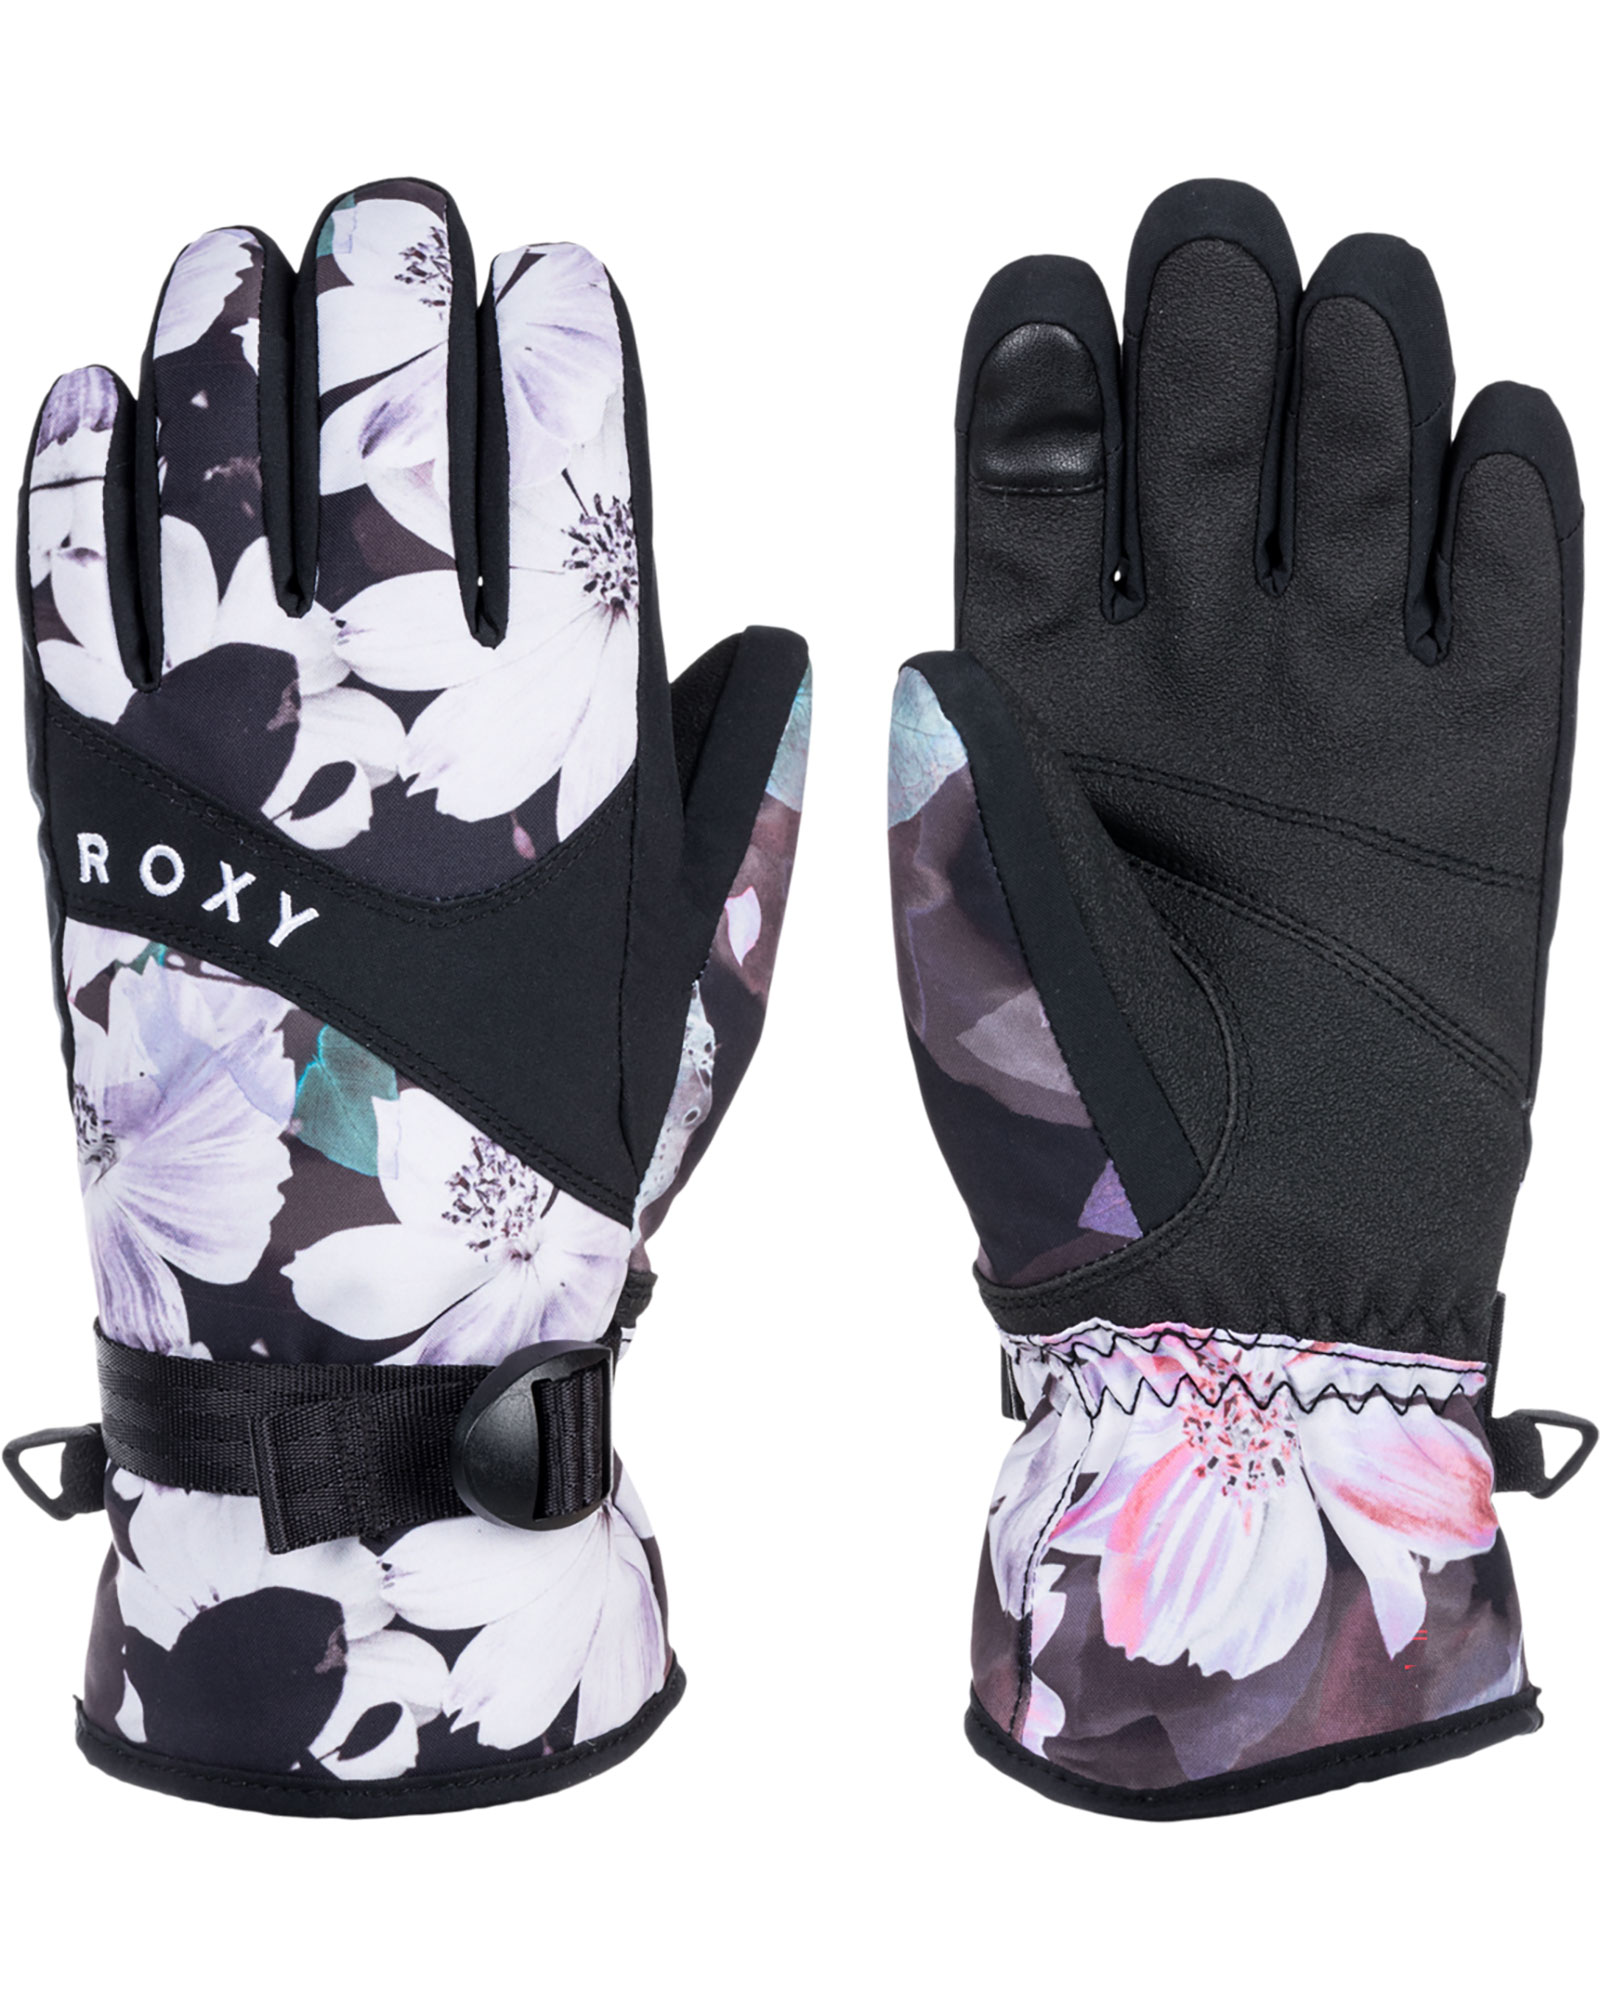 Roxy Girl’s Jetty Gloves - True Black Blurry Flower S